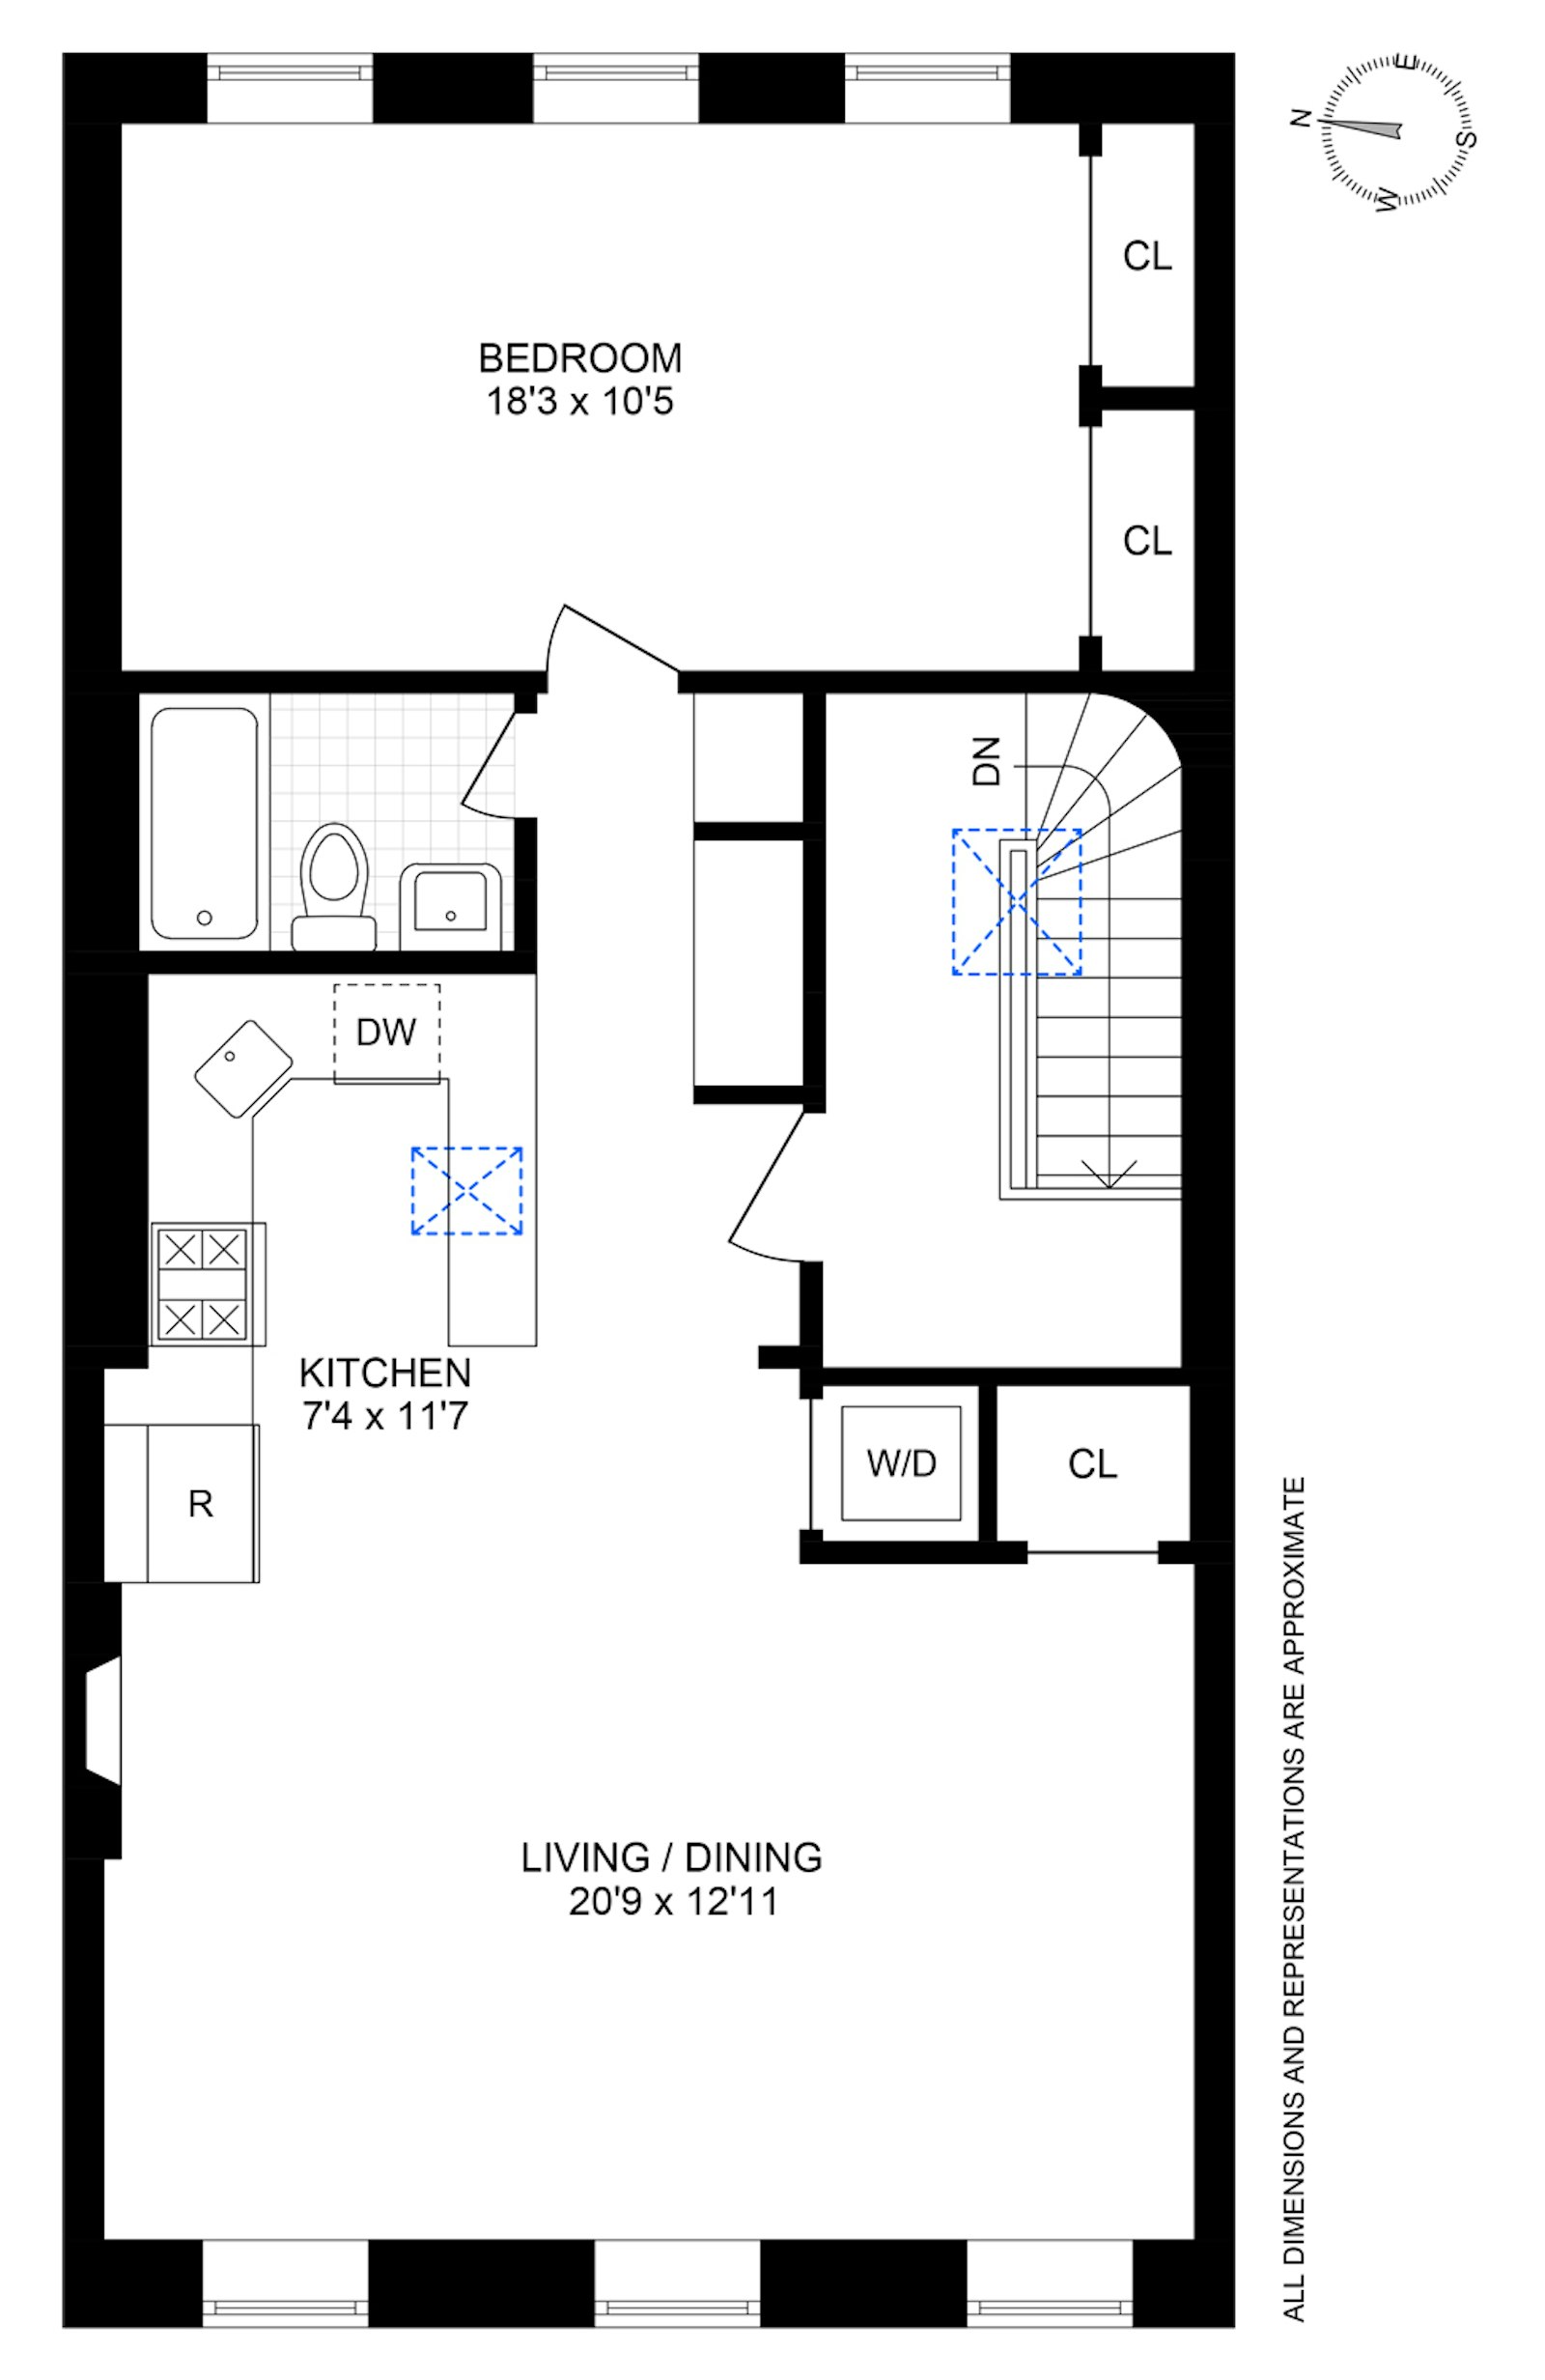 Floorplan for 275 Clermont Avenue, 3